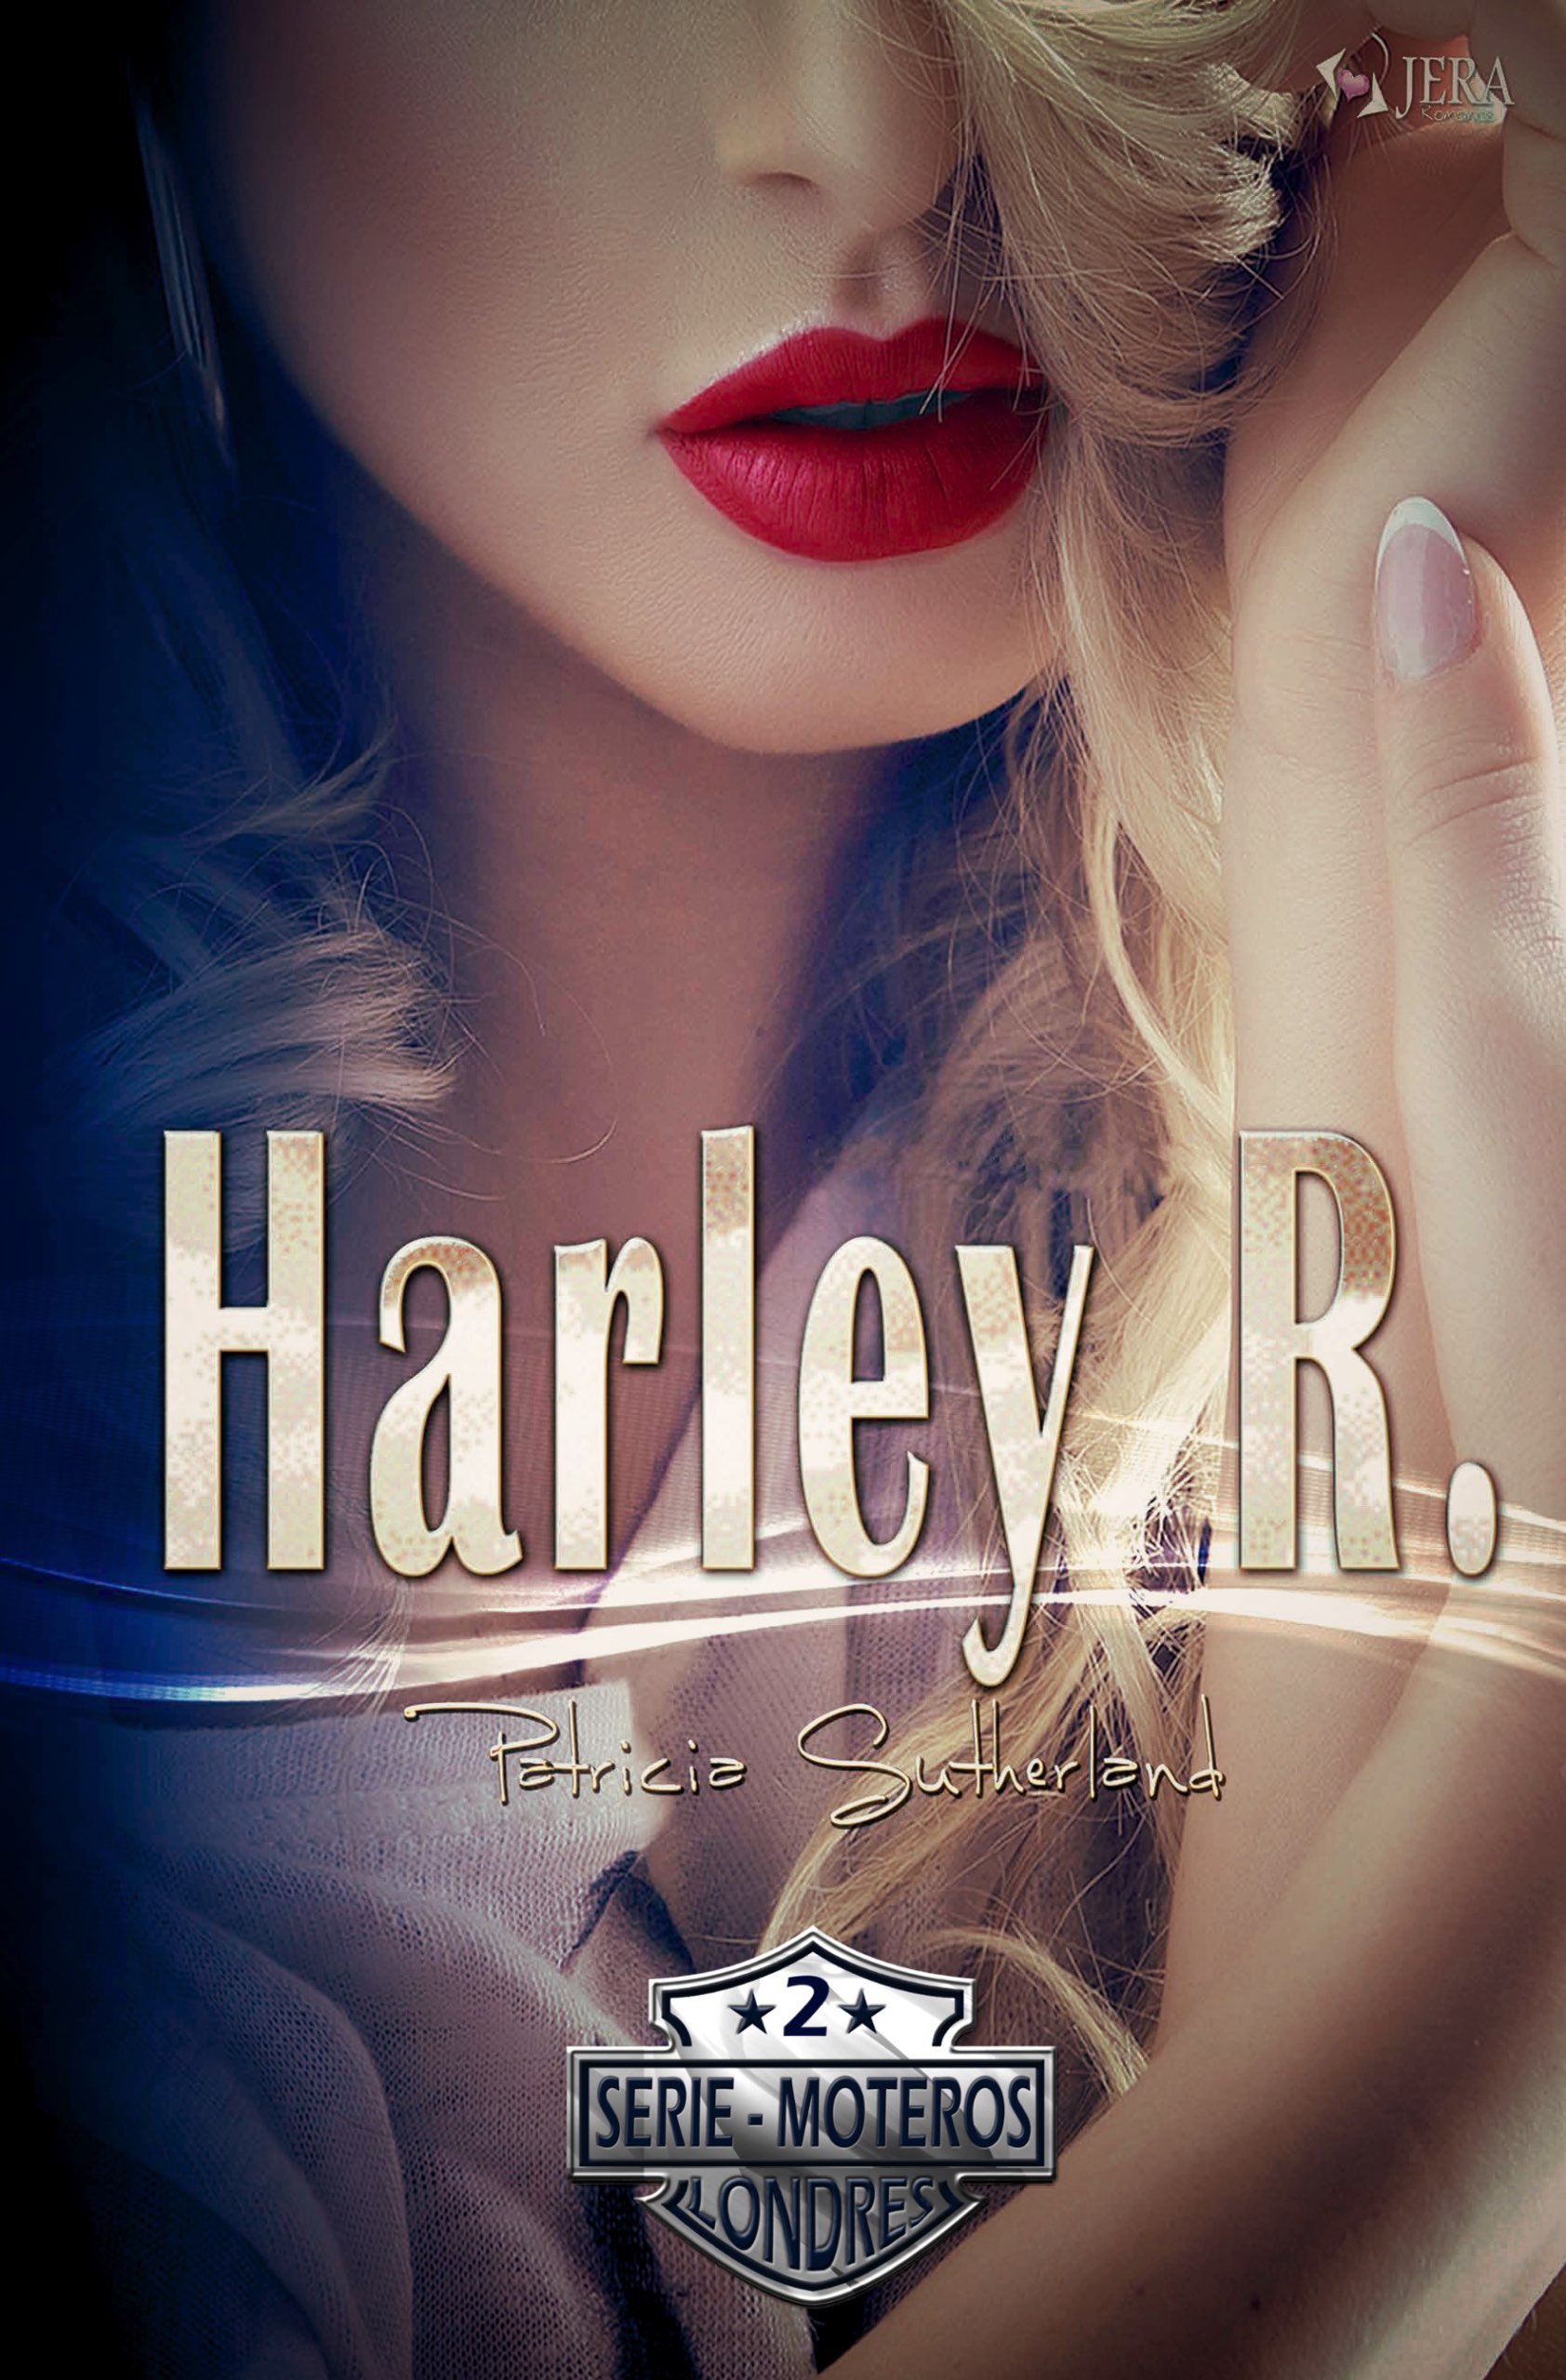 Harley R., una novela sobre el amor después del desamor